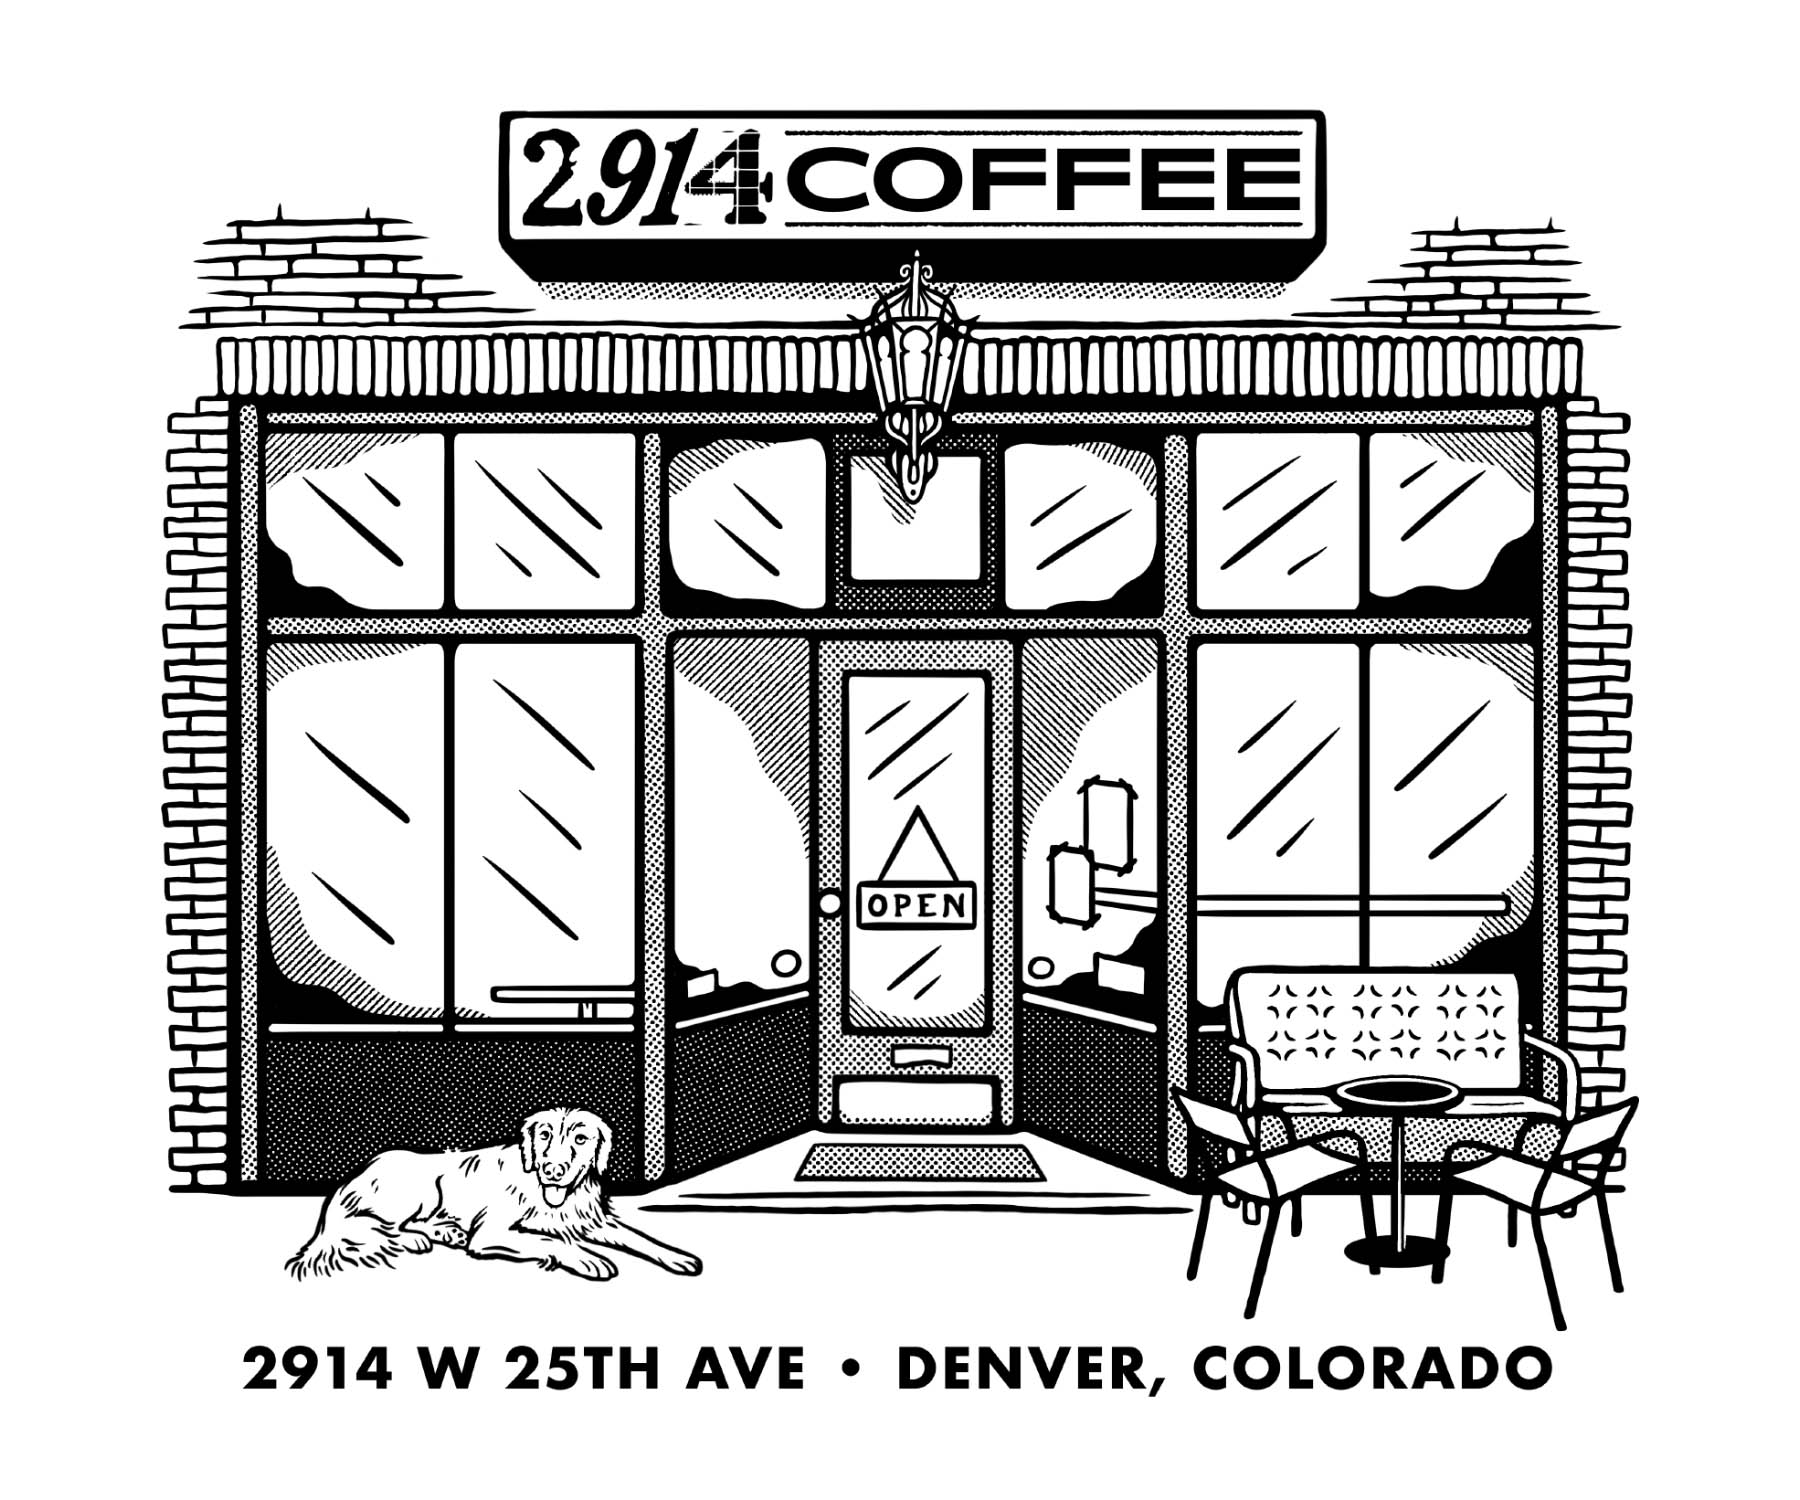 akyros art and design 2914 coffee storefront illustration